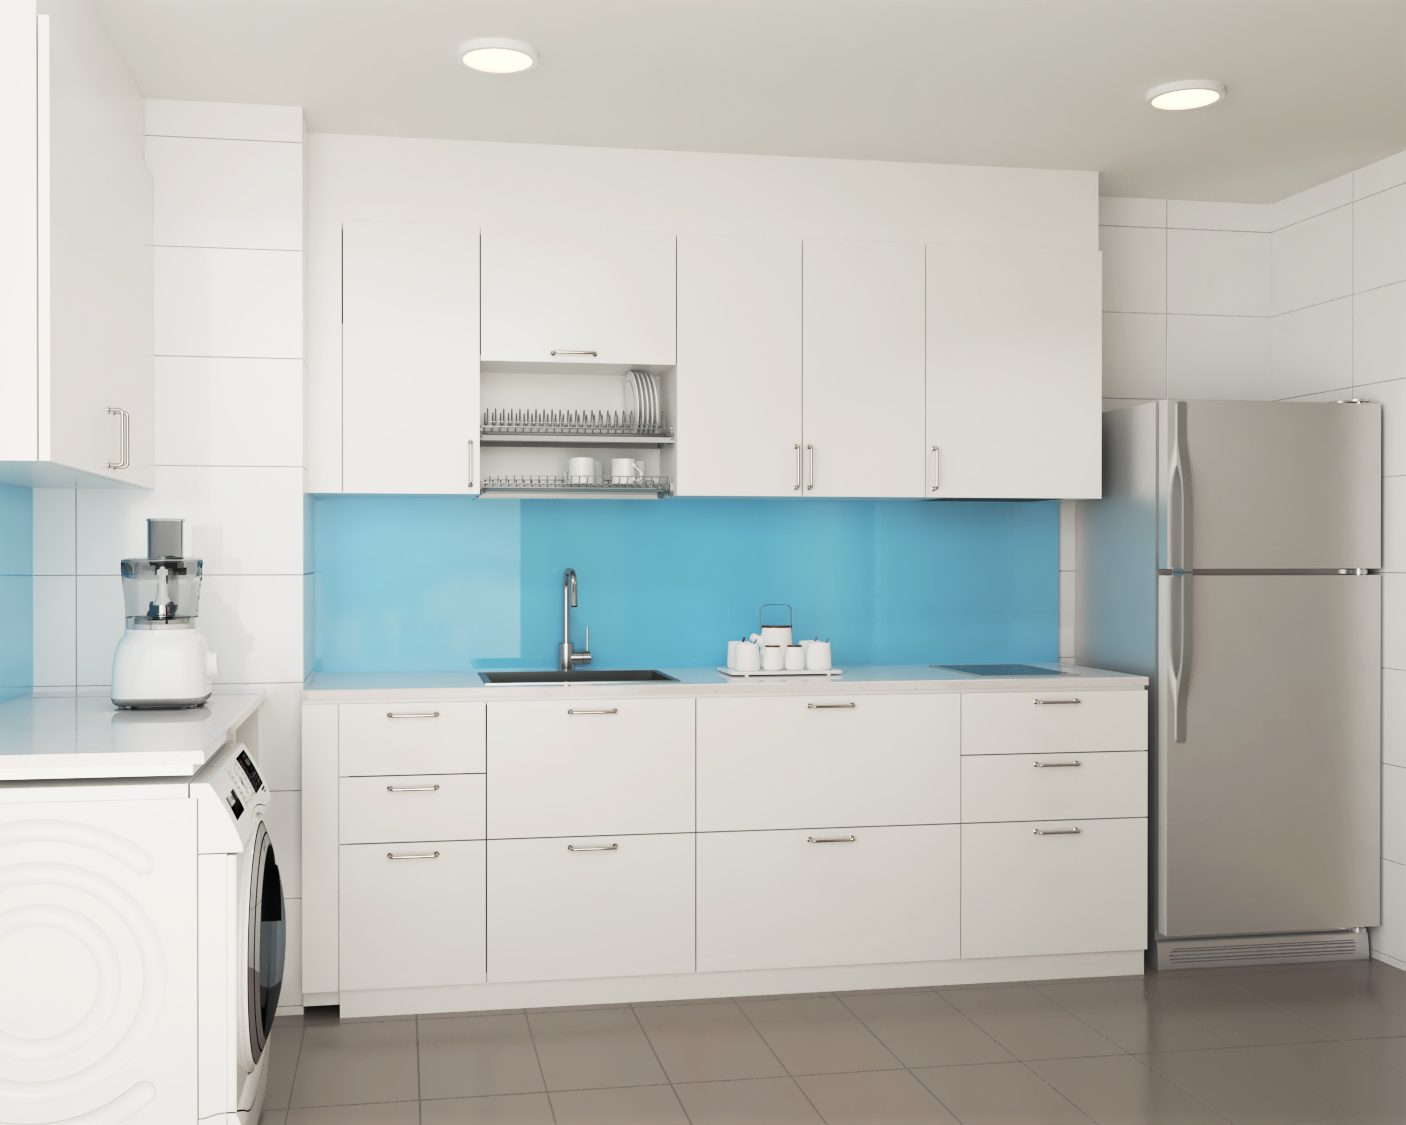 Contemporary Kitchen Cabinet Design With Shaker Blue Backsplash